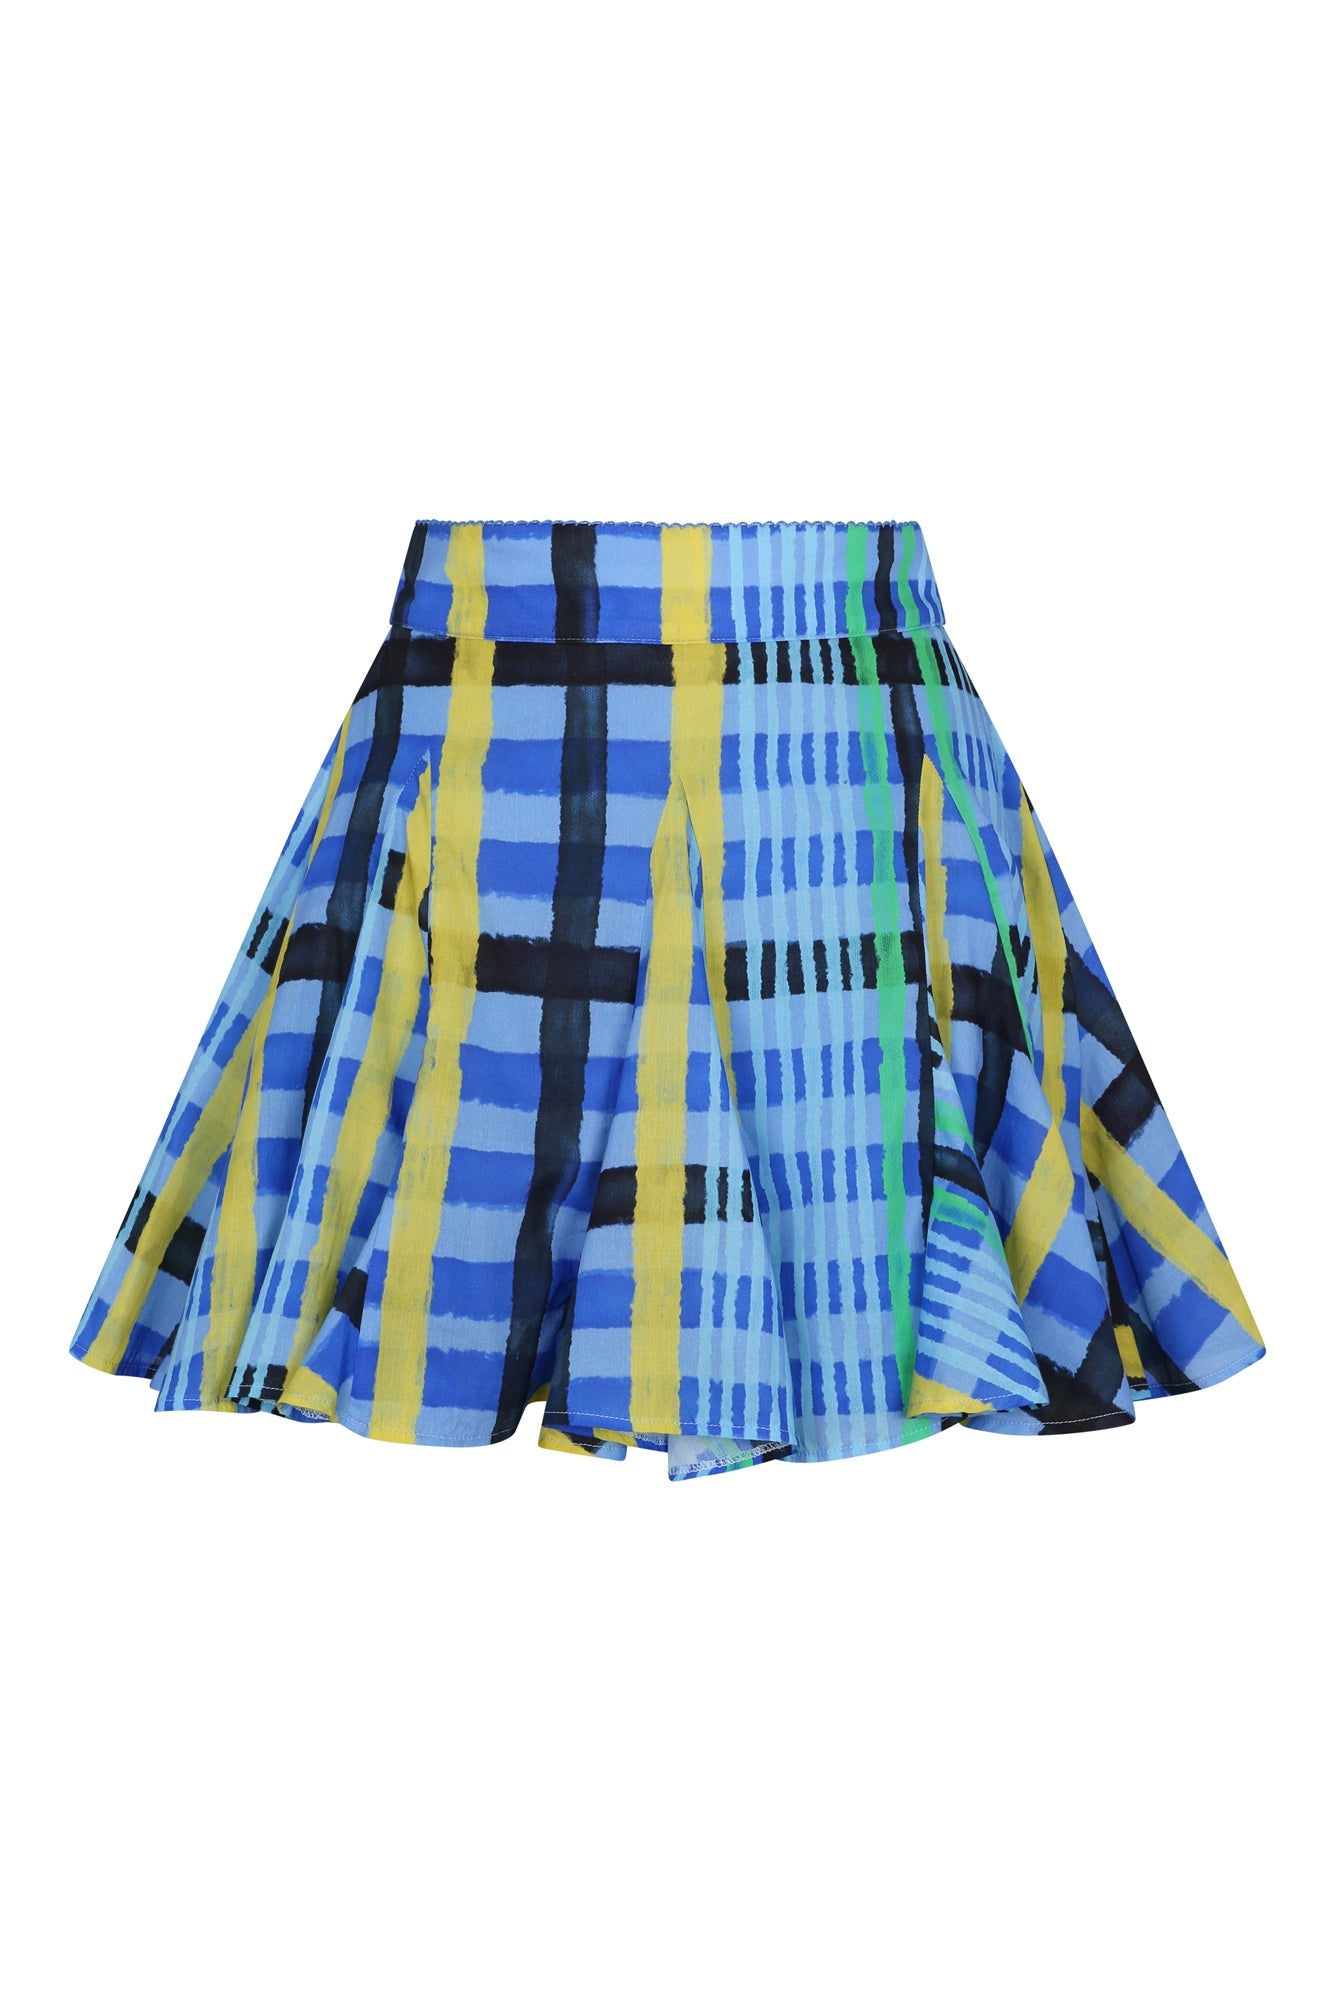 Puebla Skirt in Tartan Charra Azul Print